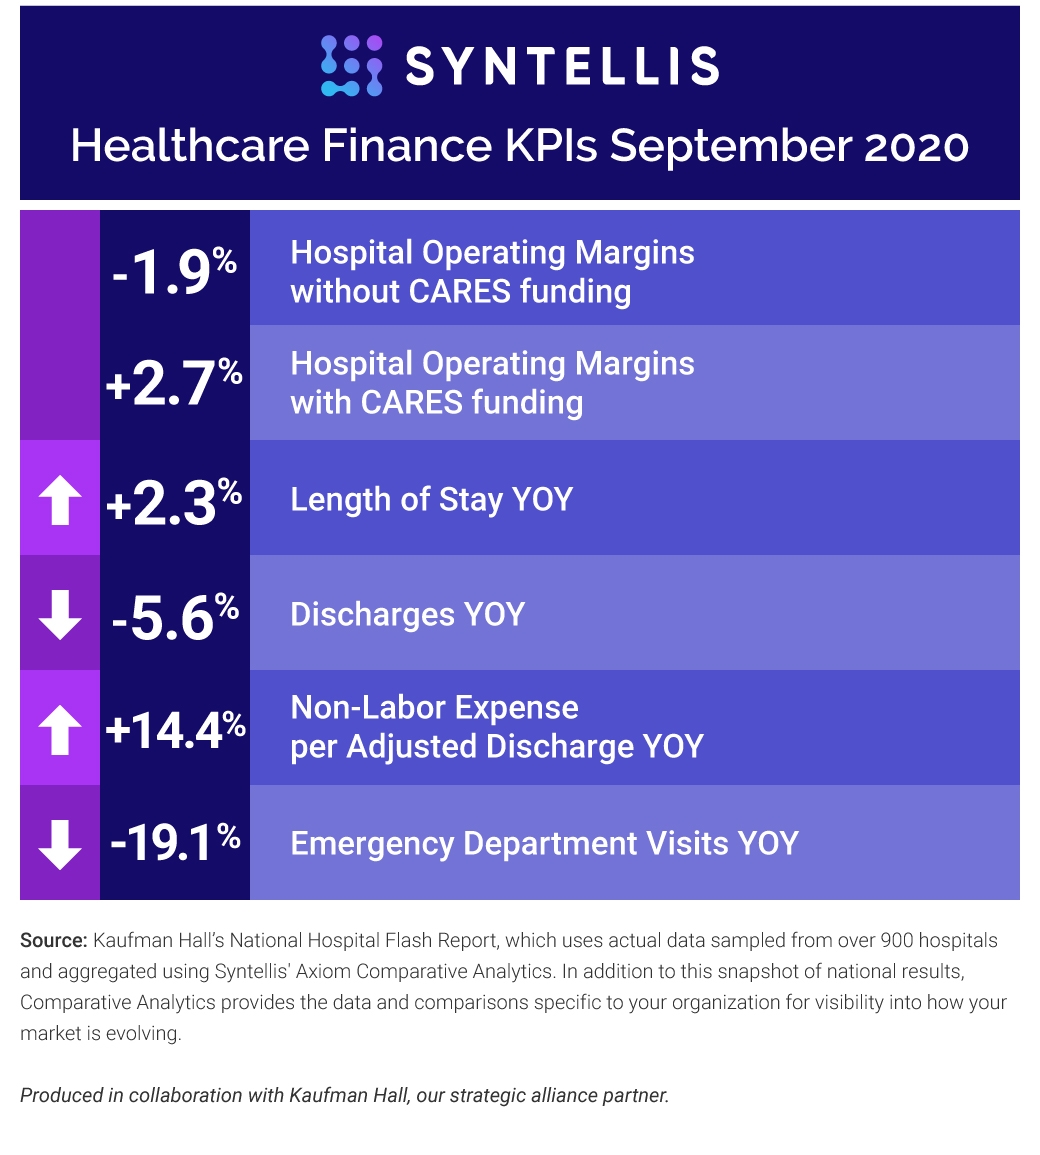 Top 5 Healthcare KPIs for September 2020